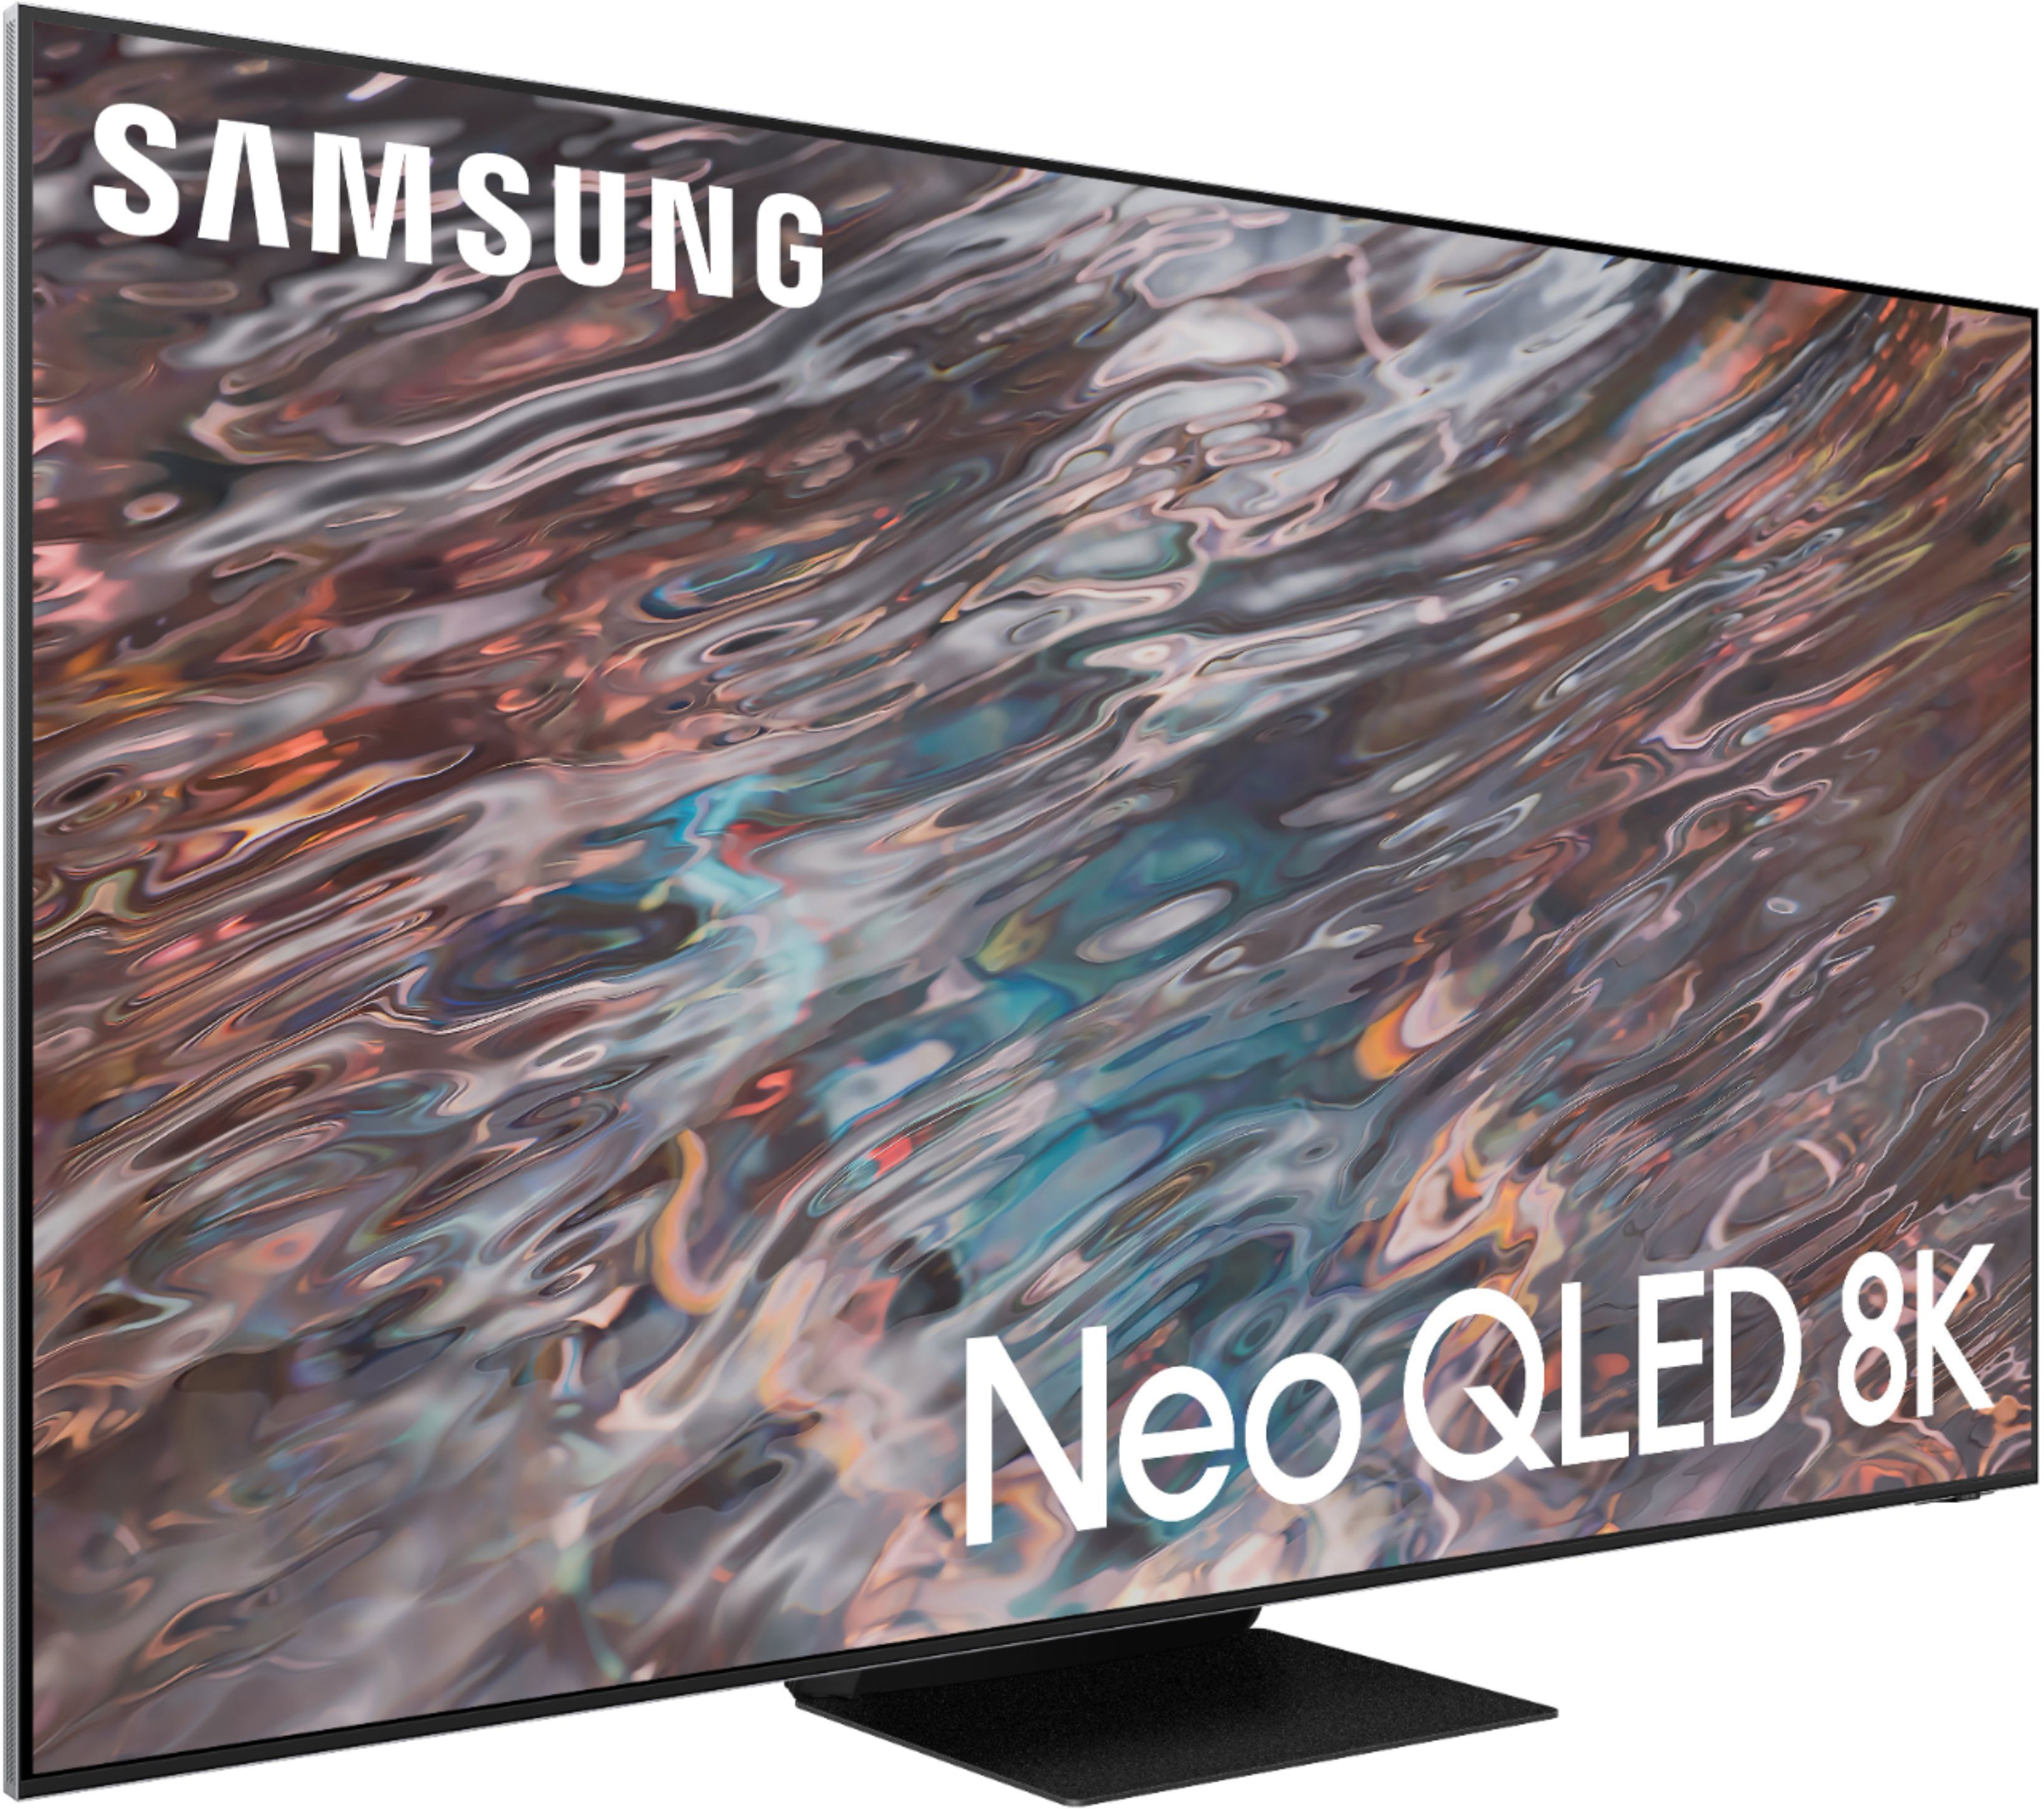 TV] Samsung - 55 Class QN700B Neo QLED 8K Smart TV - $999.99 ($1999.99 -  $1000) : r/buildapcsales